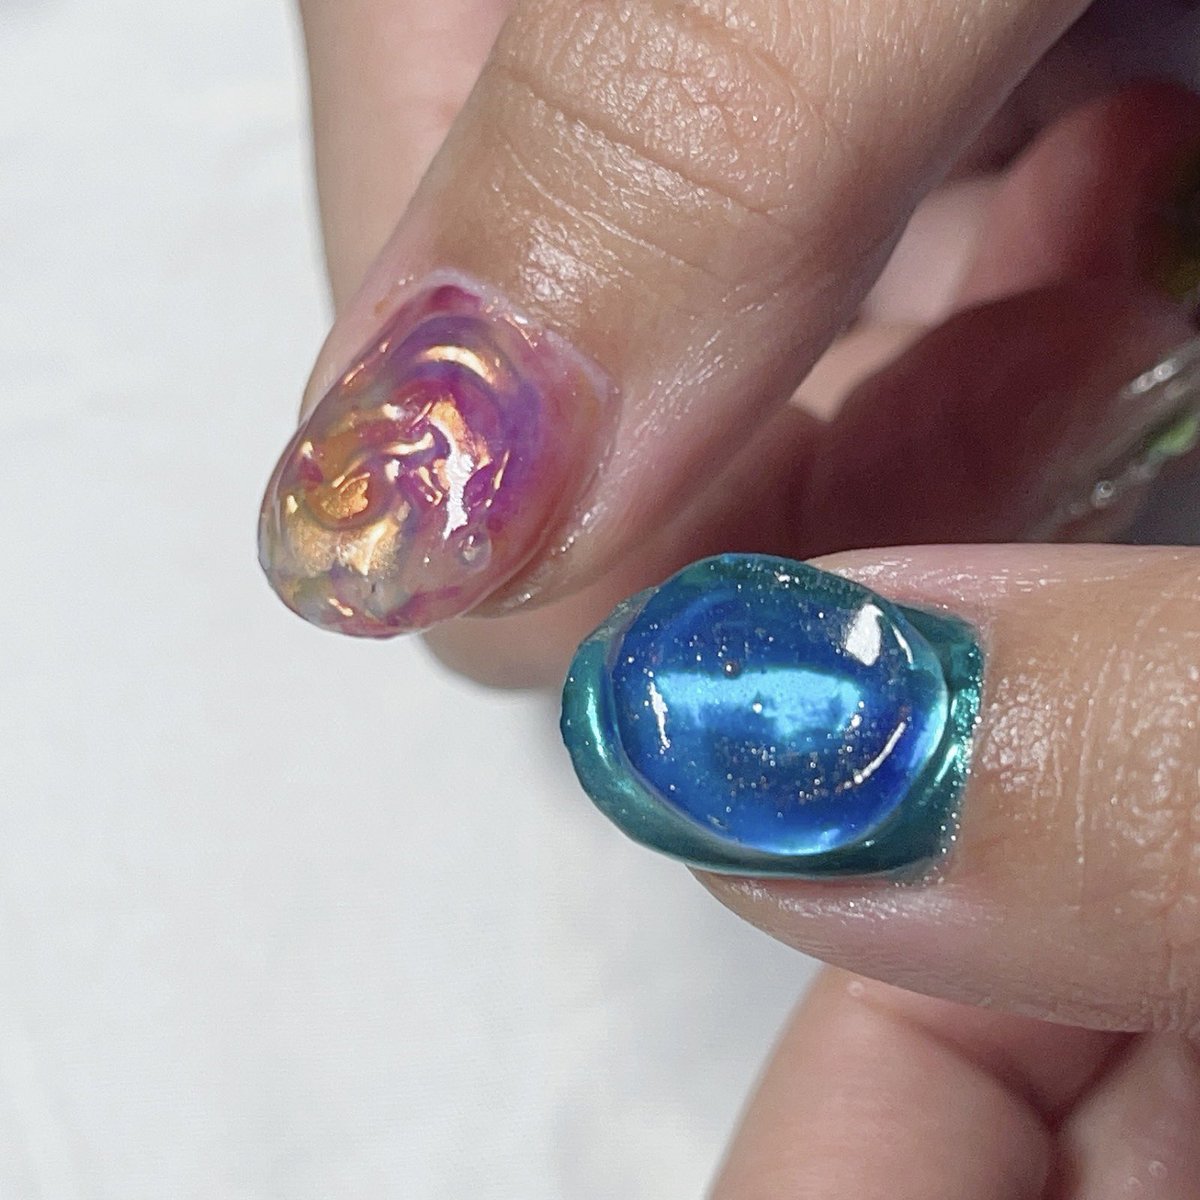 thumbss 

☻

#nails #manicure #gelnails #sgnails #chromenails #alien #flutterytips